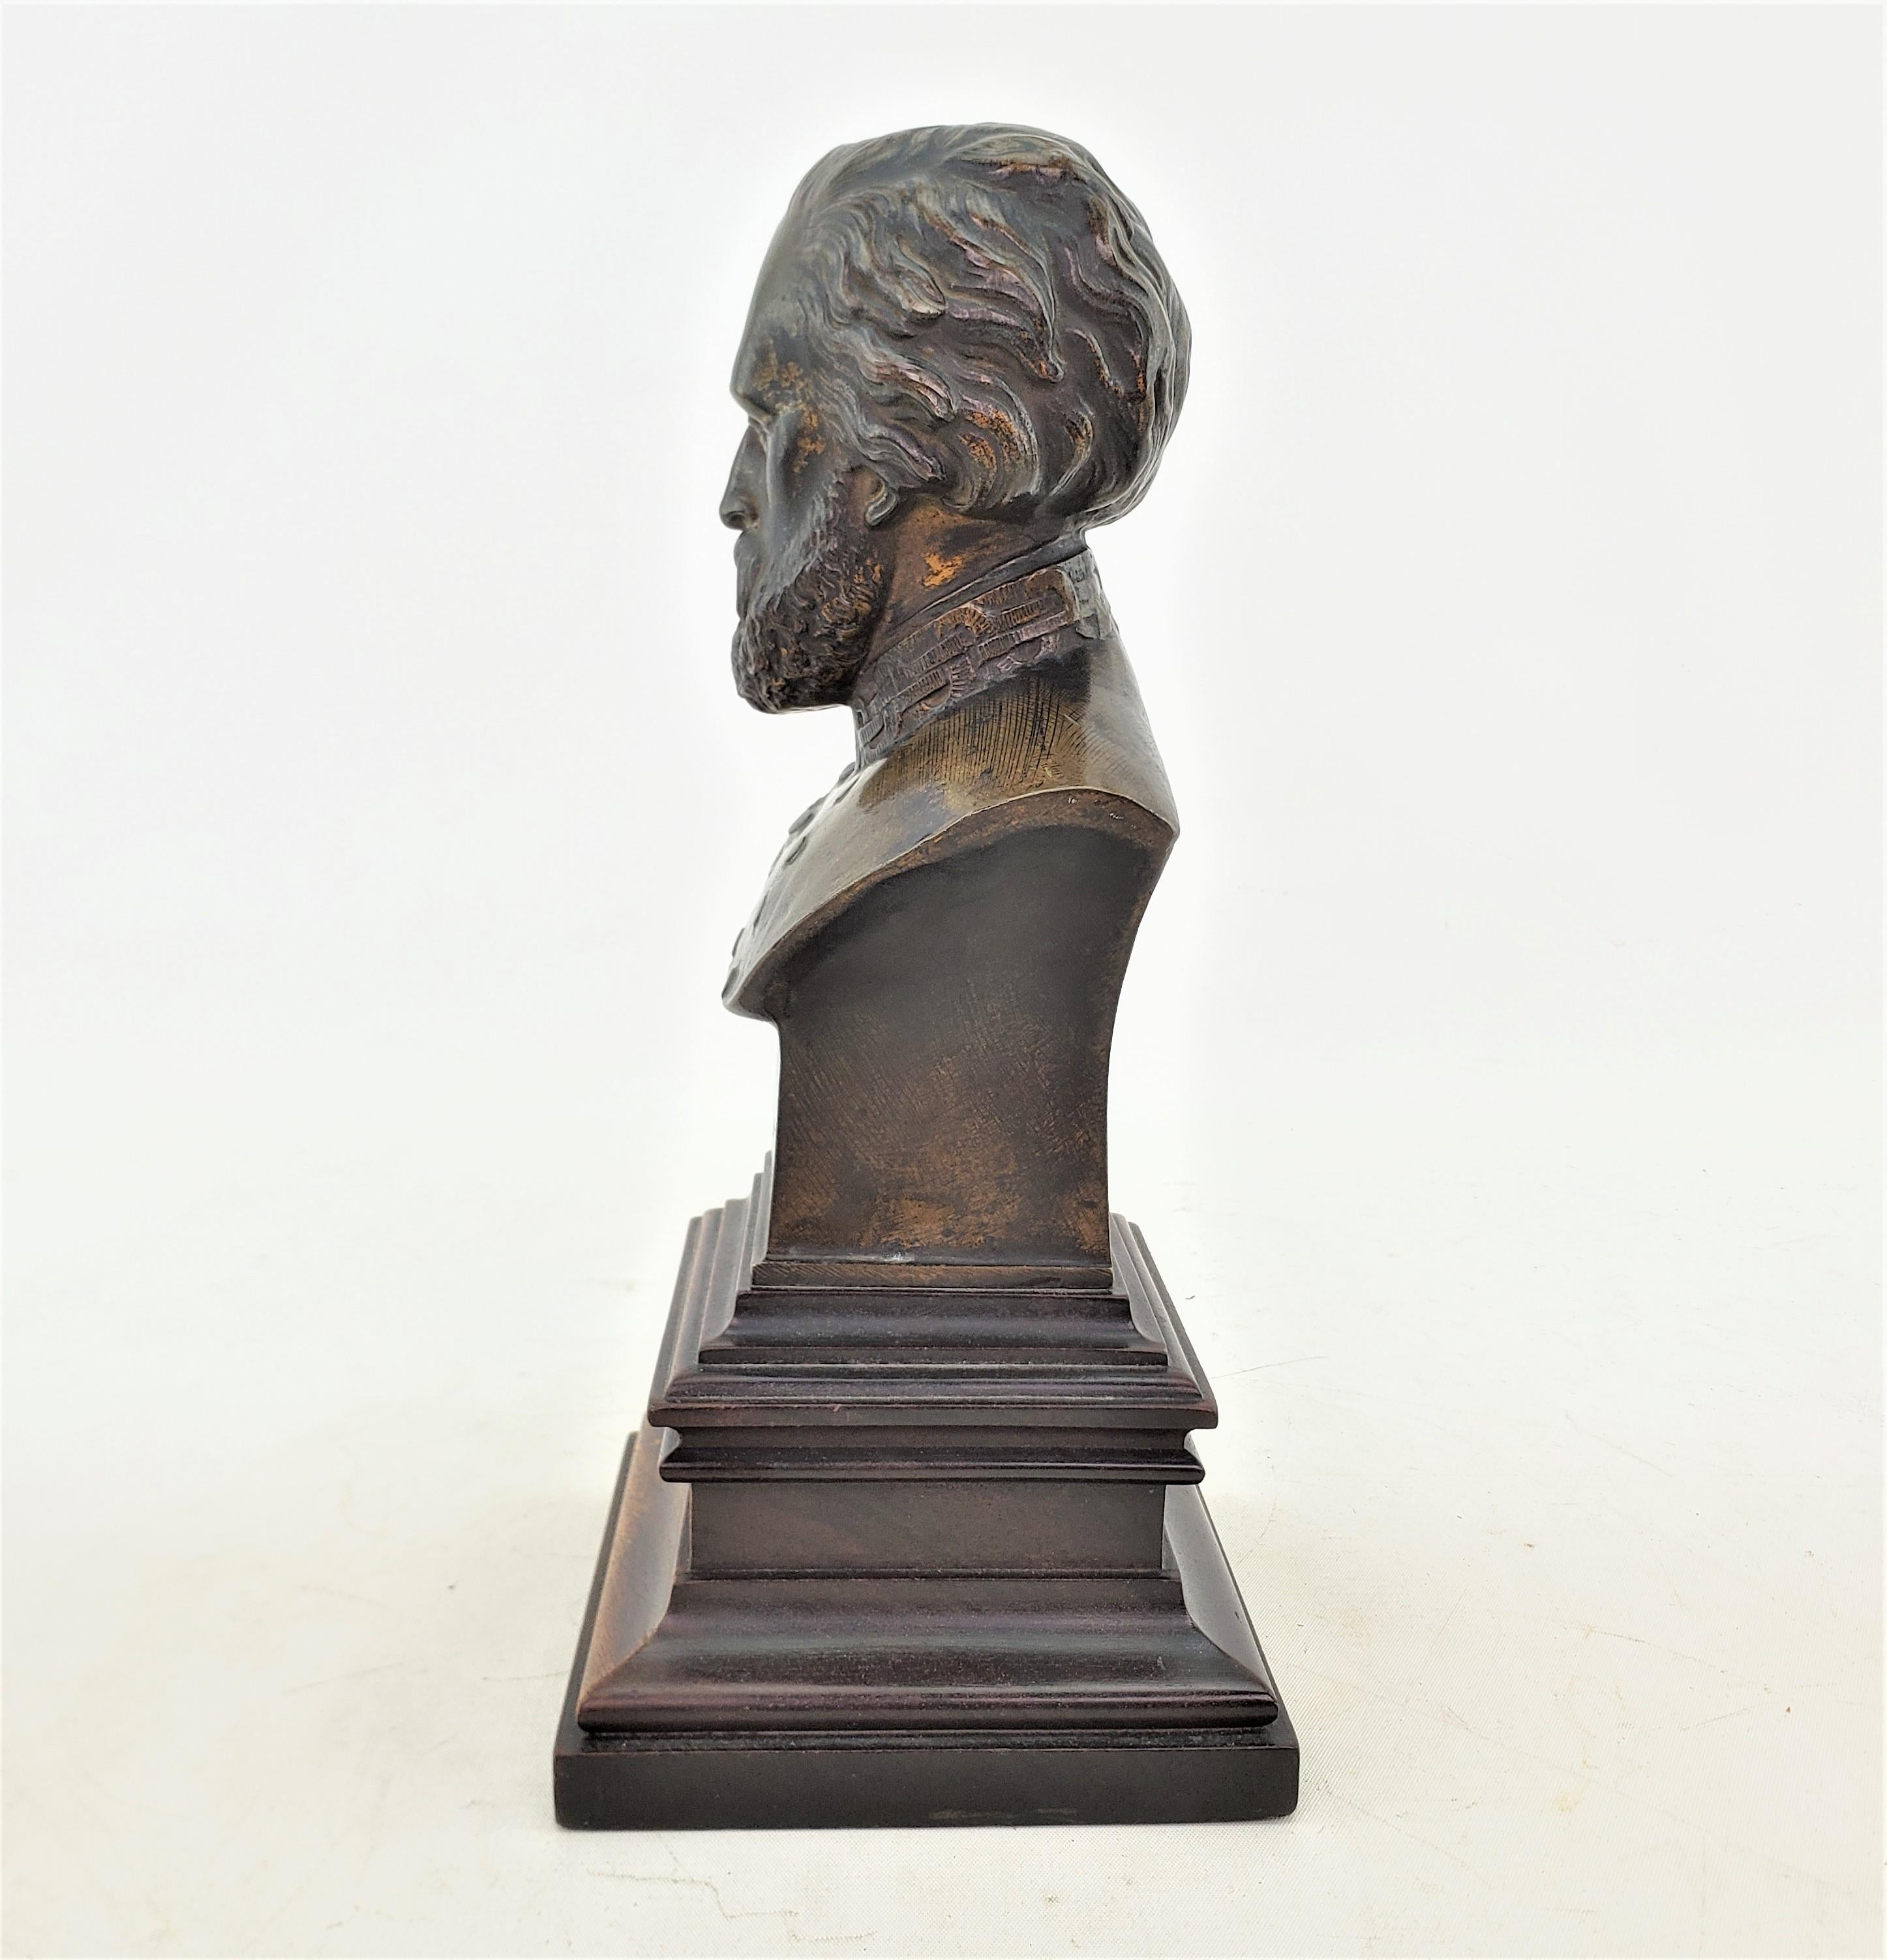 Cast Giuseppe Garibaldi Antique Italian Bronze Bust or Sculpture on a Wooden Base